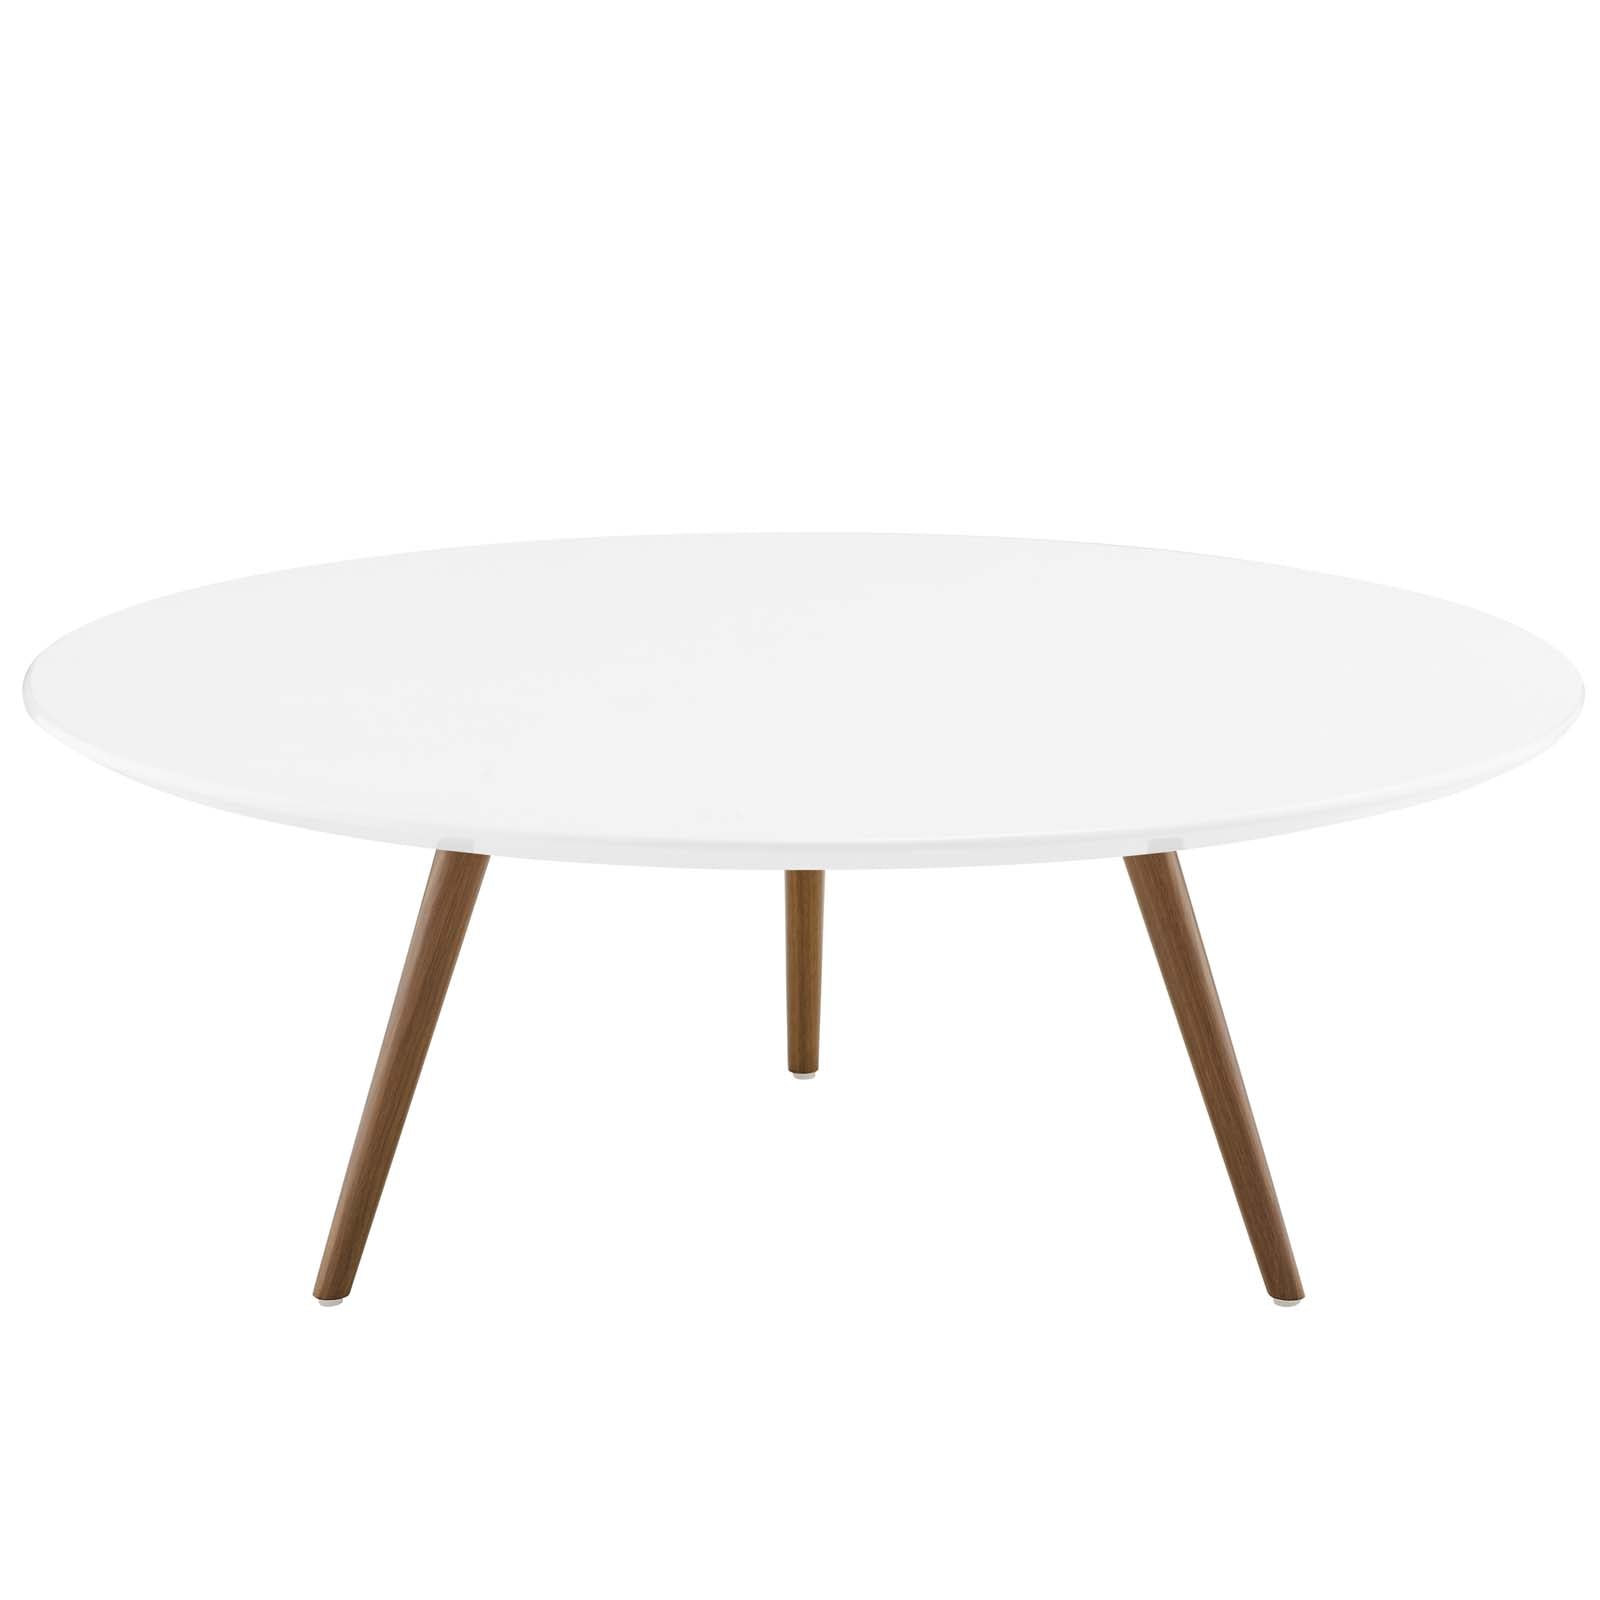 Lippa 40" Round Wood Top Coffee Table with Tripod Base - East Shore Modern Home Furnishings